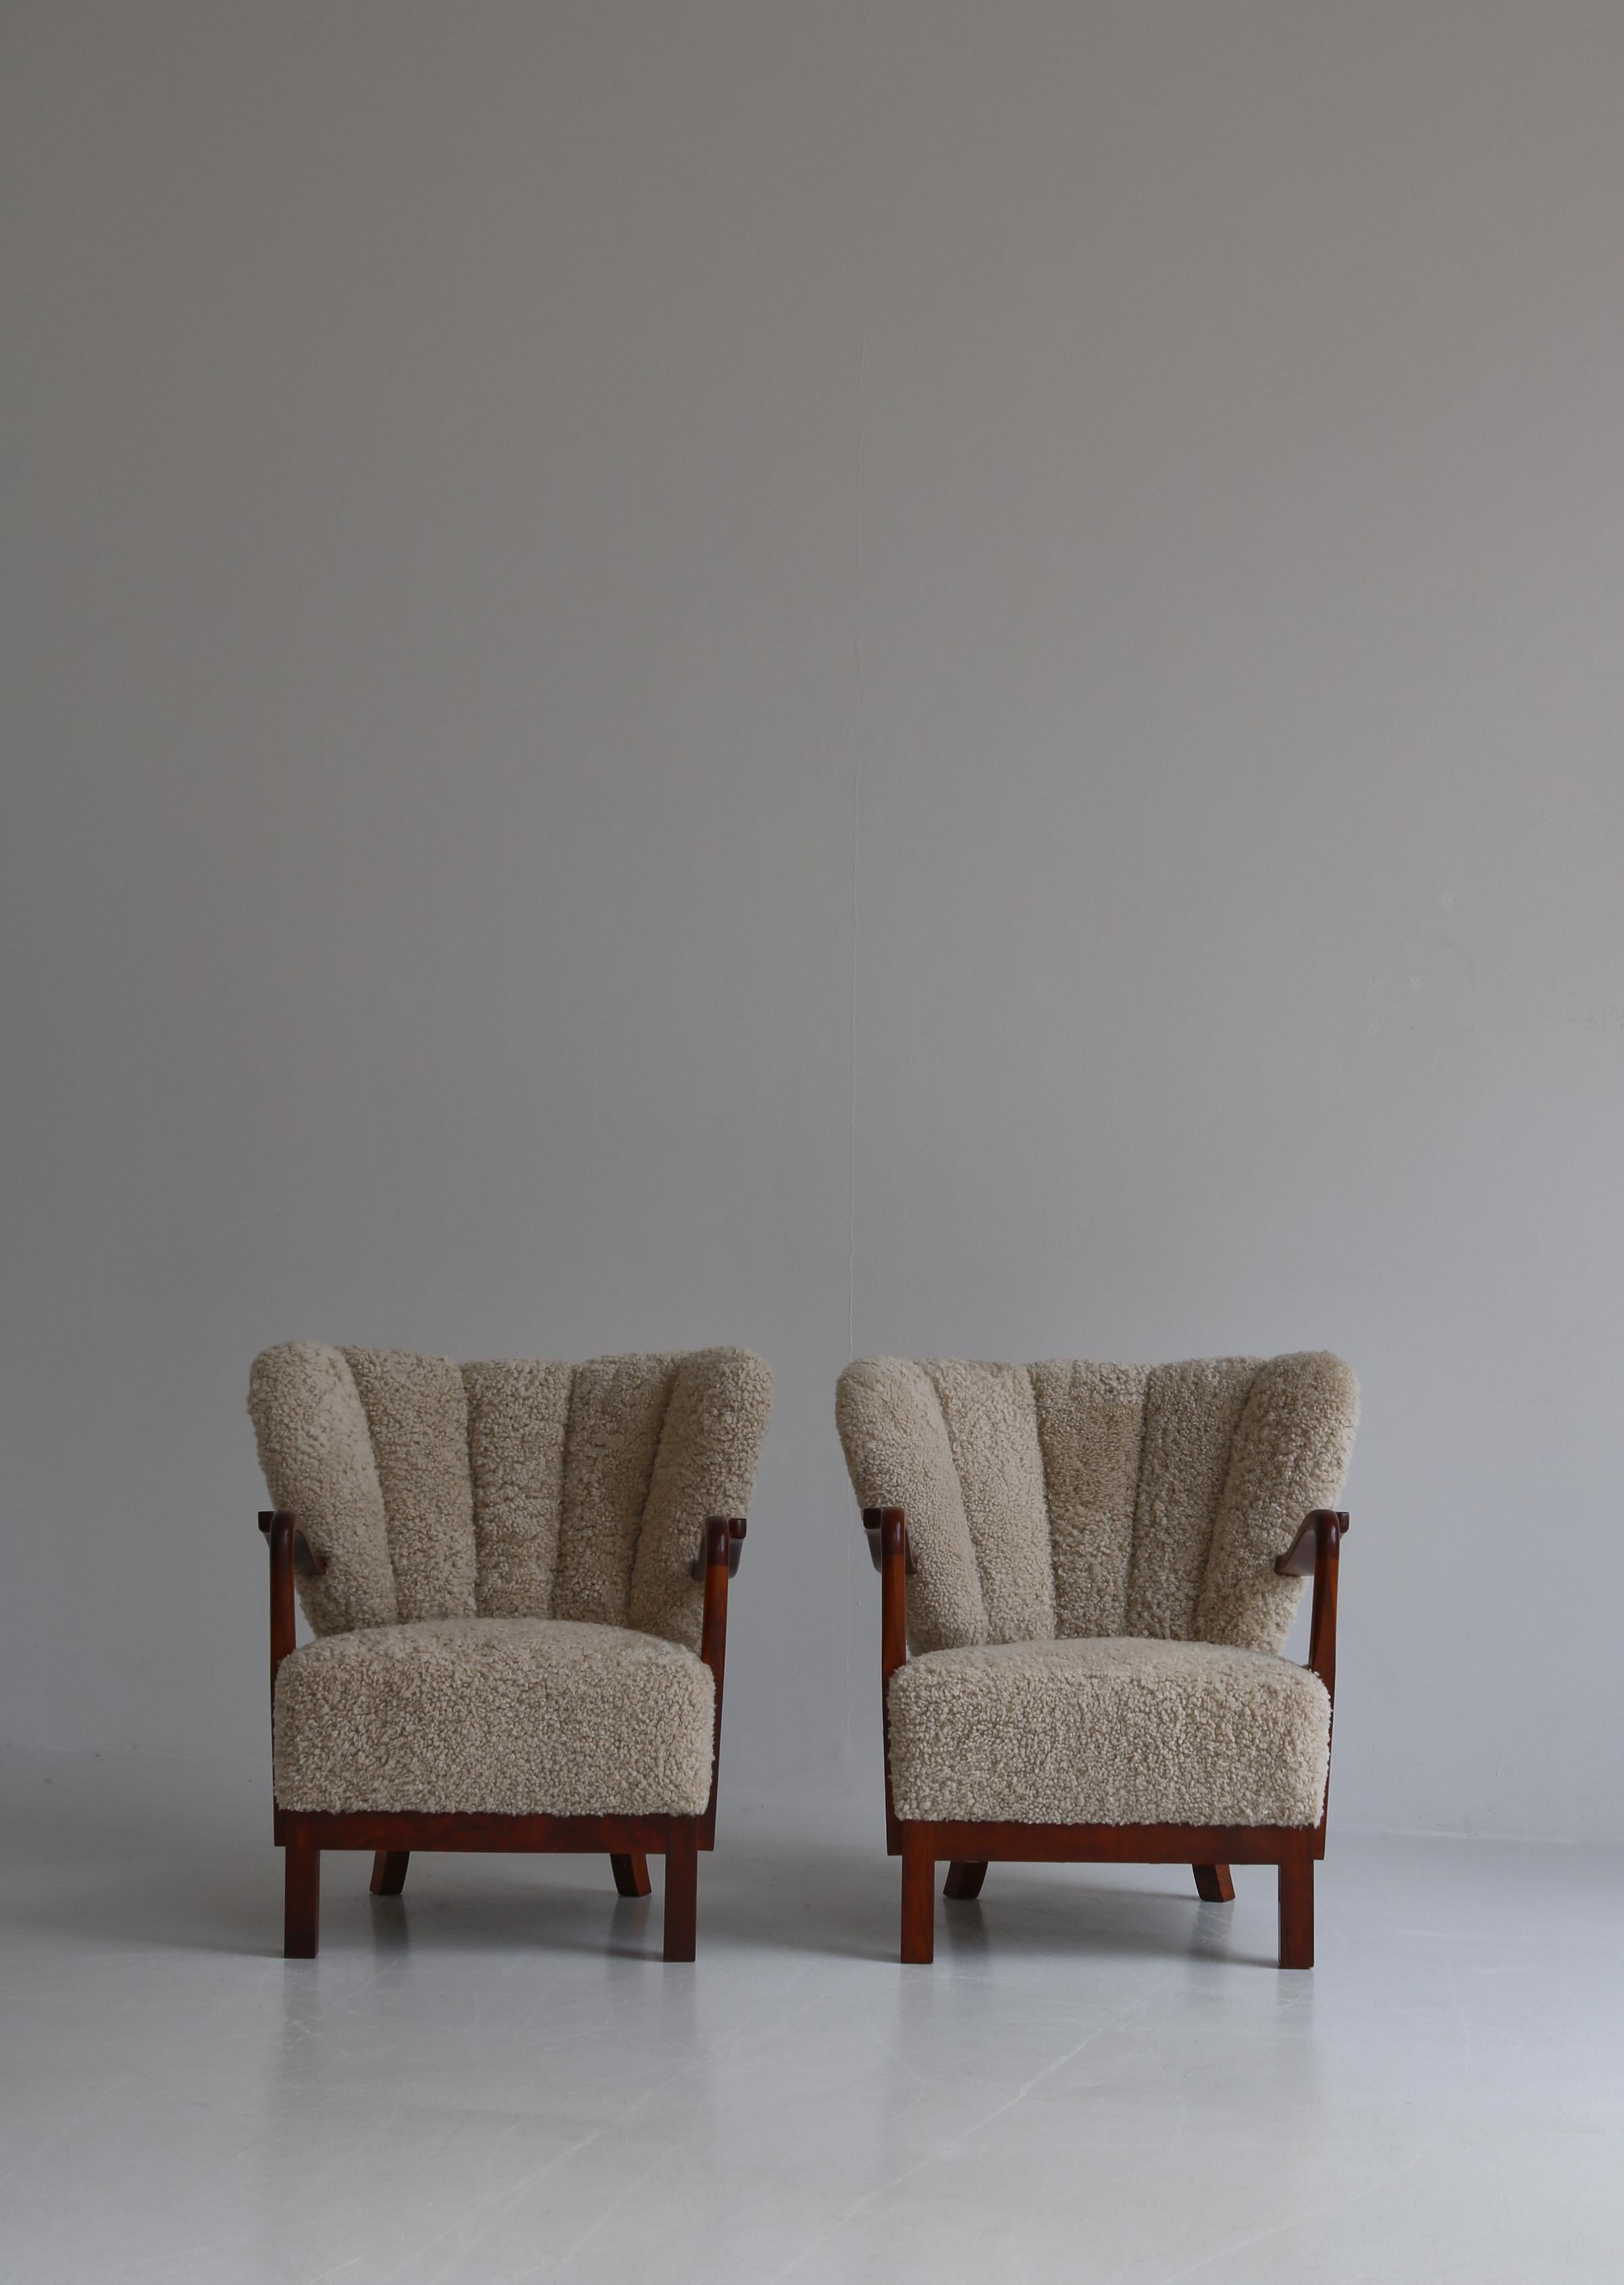 Scandinavian Modern Viggo Boesen Lounge Chairs in Nutwood and Sheepskin, 1930s Danish Modern For Sale